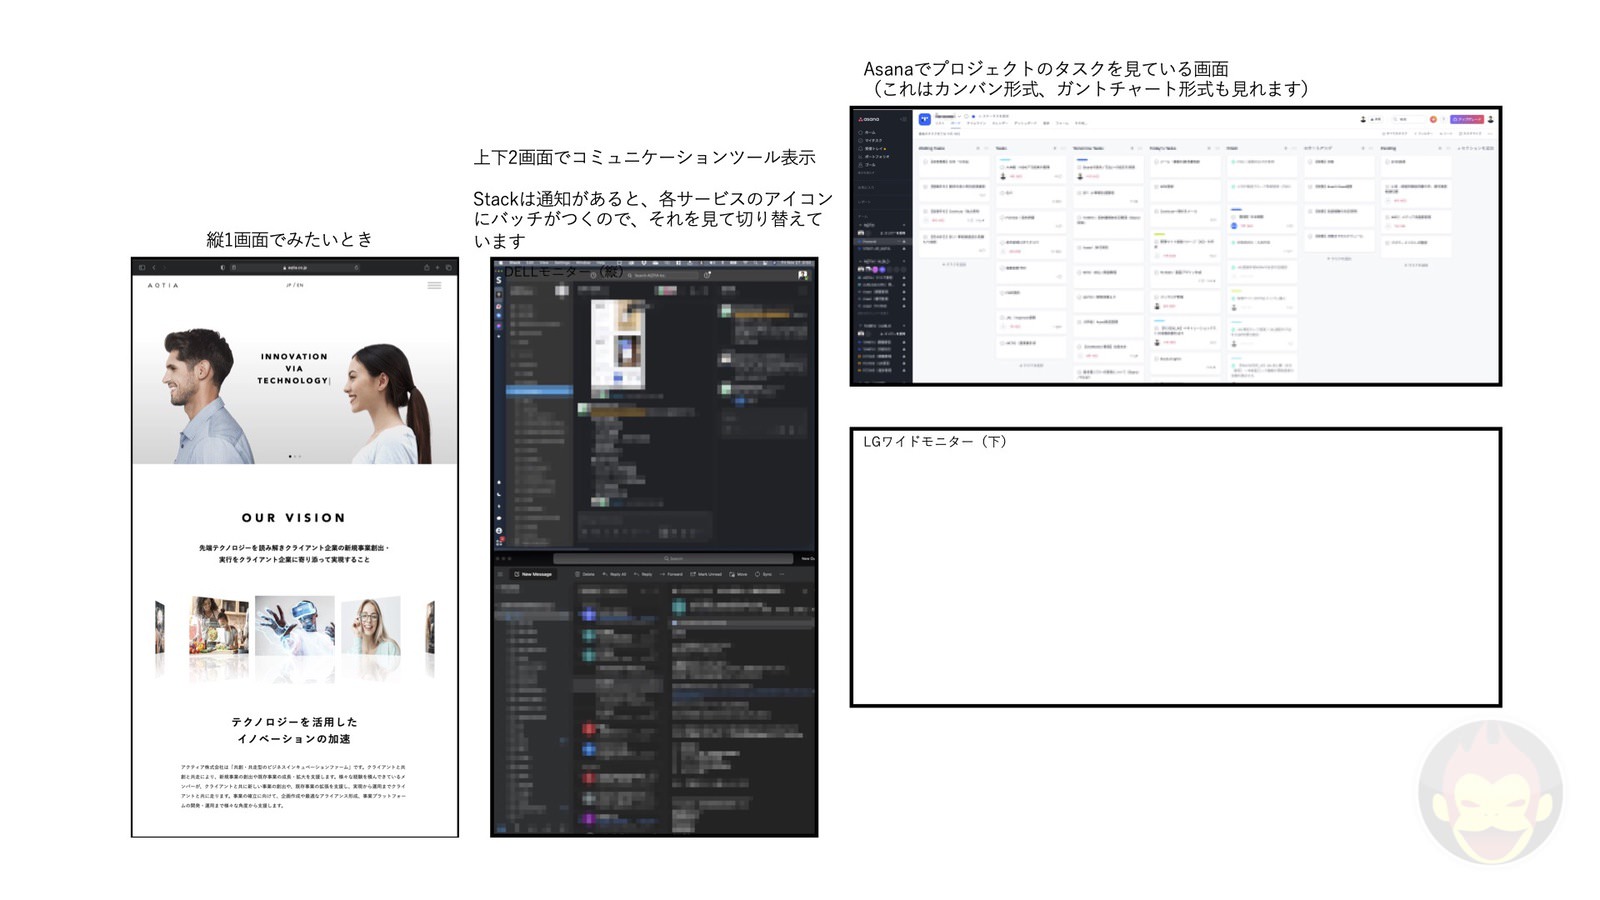 Using-multiple-displays-for-work-image-01.jpg